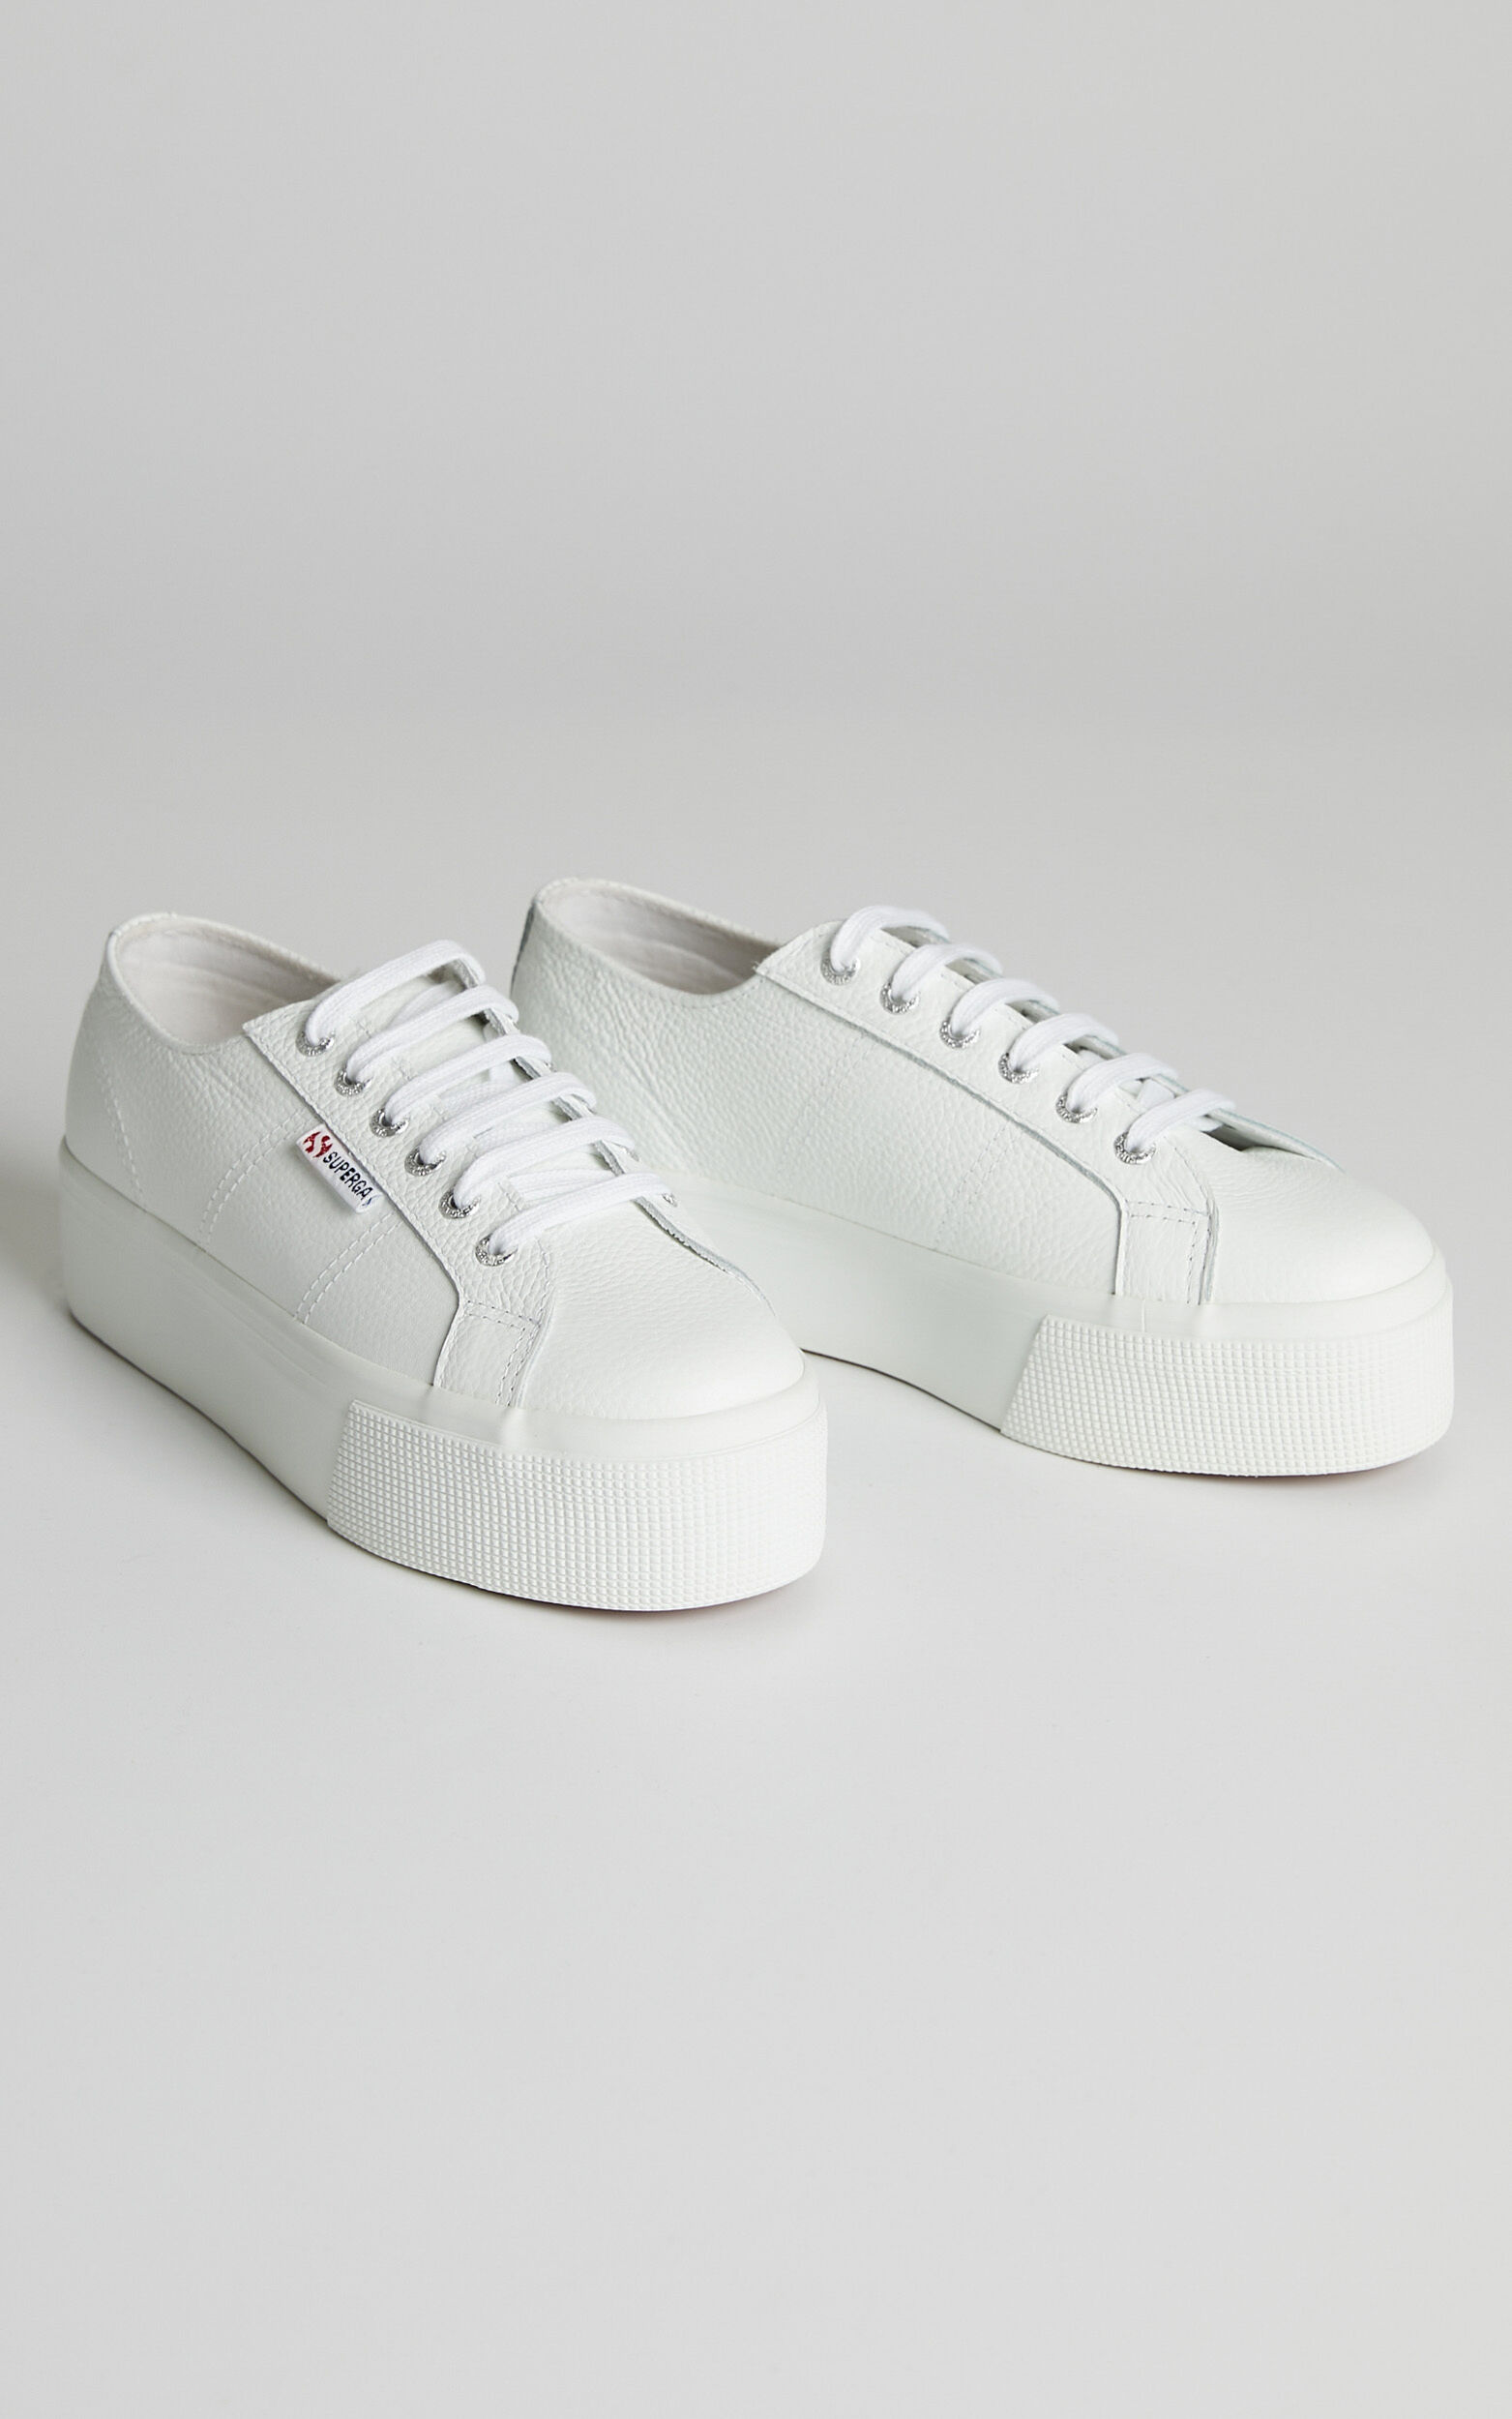 Superga - 2790 Tumbled Leather Sneakers in White | Showpo